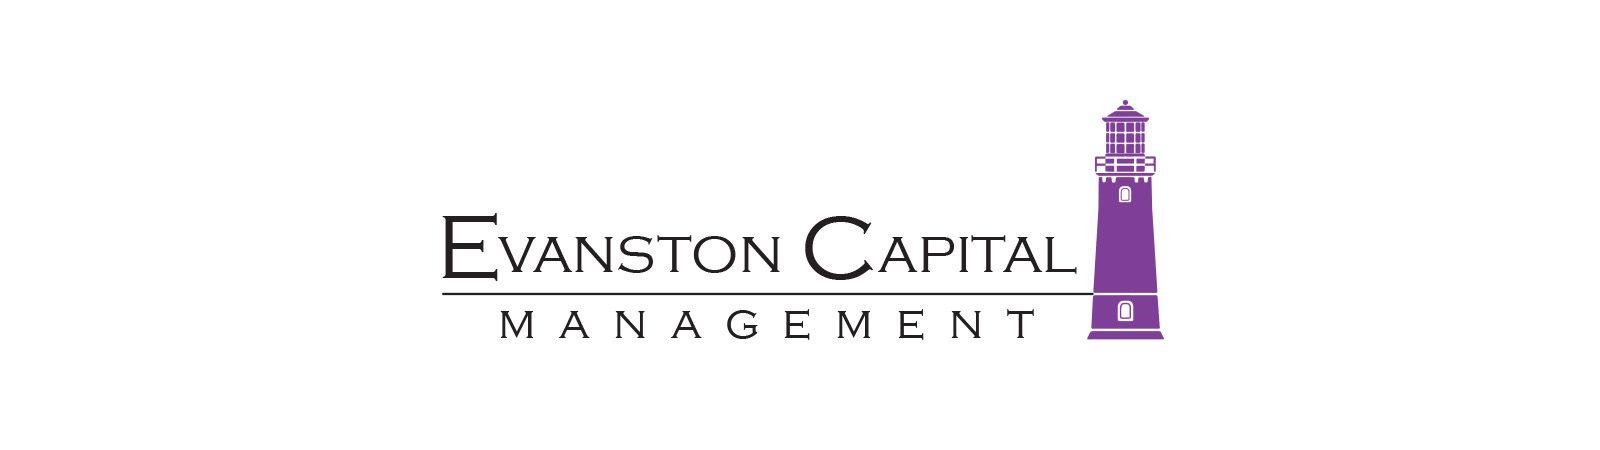 Evanston Logo - Evanston Capital Management. Financial Services Sector. TA. A